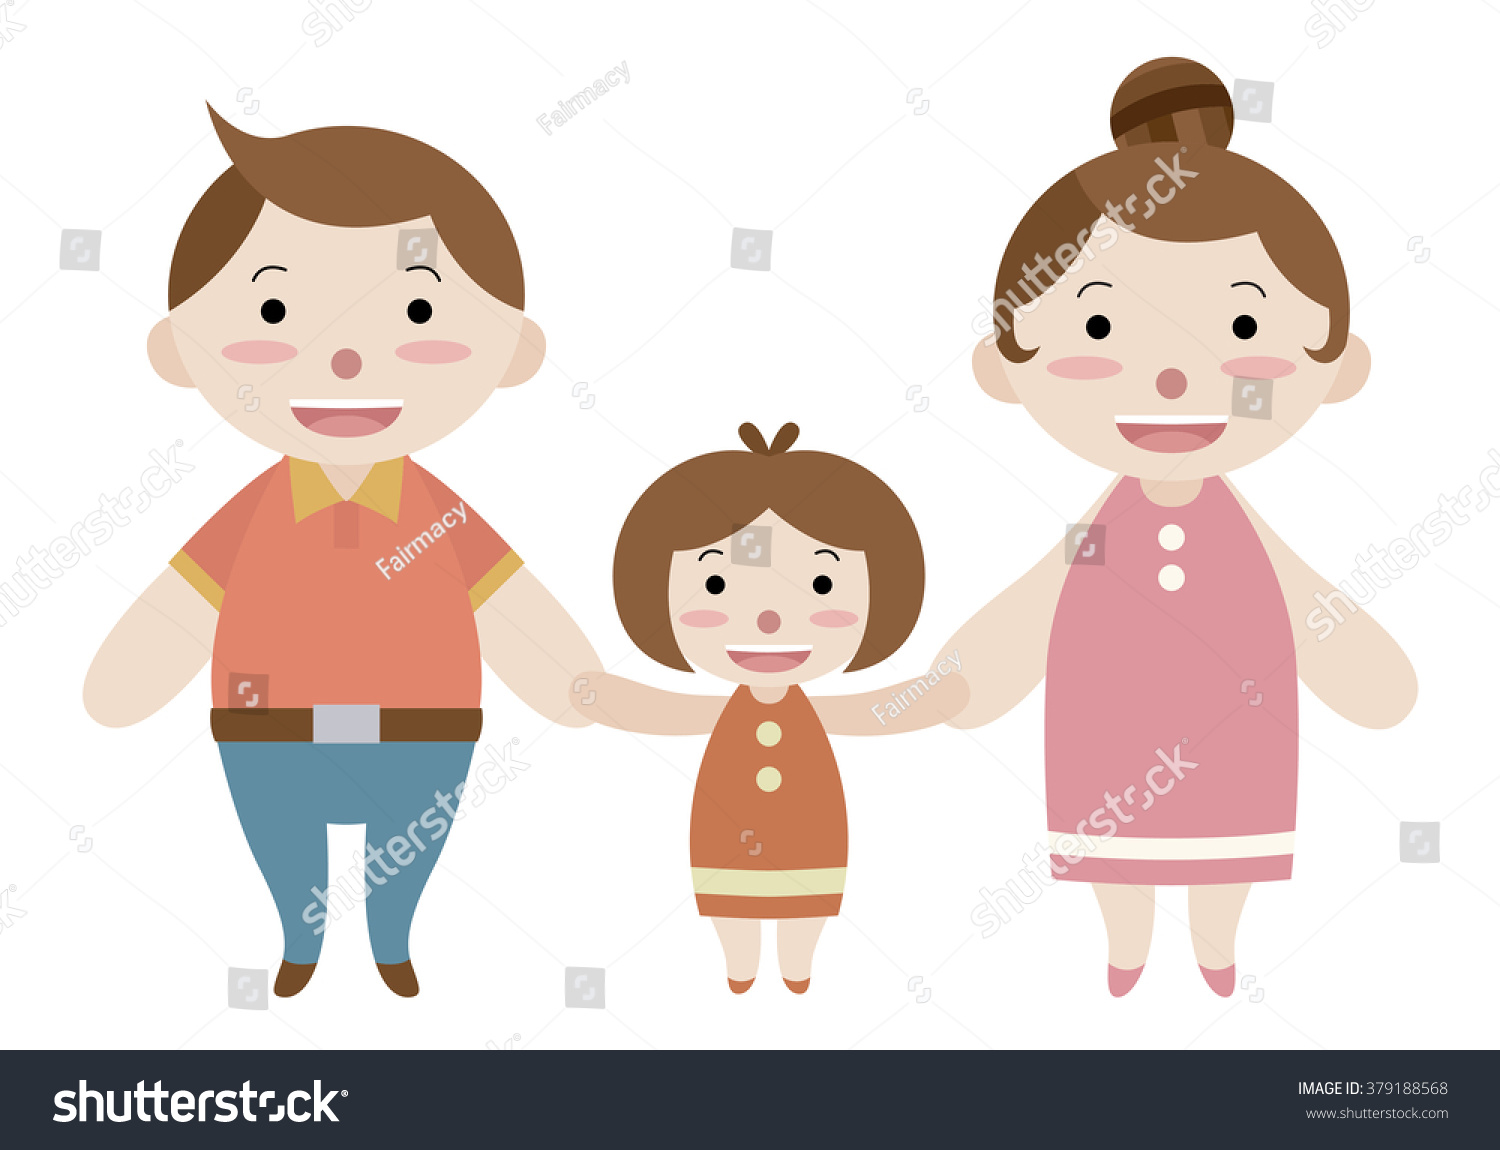 Dad Mom And Son Cartoon Vector - 379188568 : Shutterstock